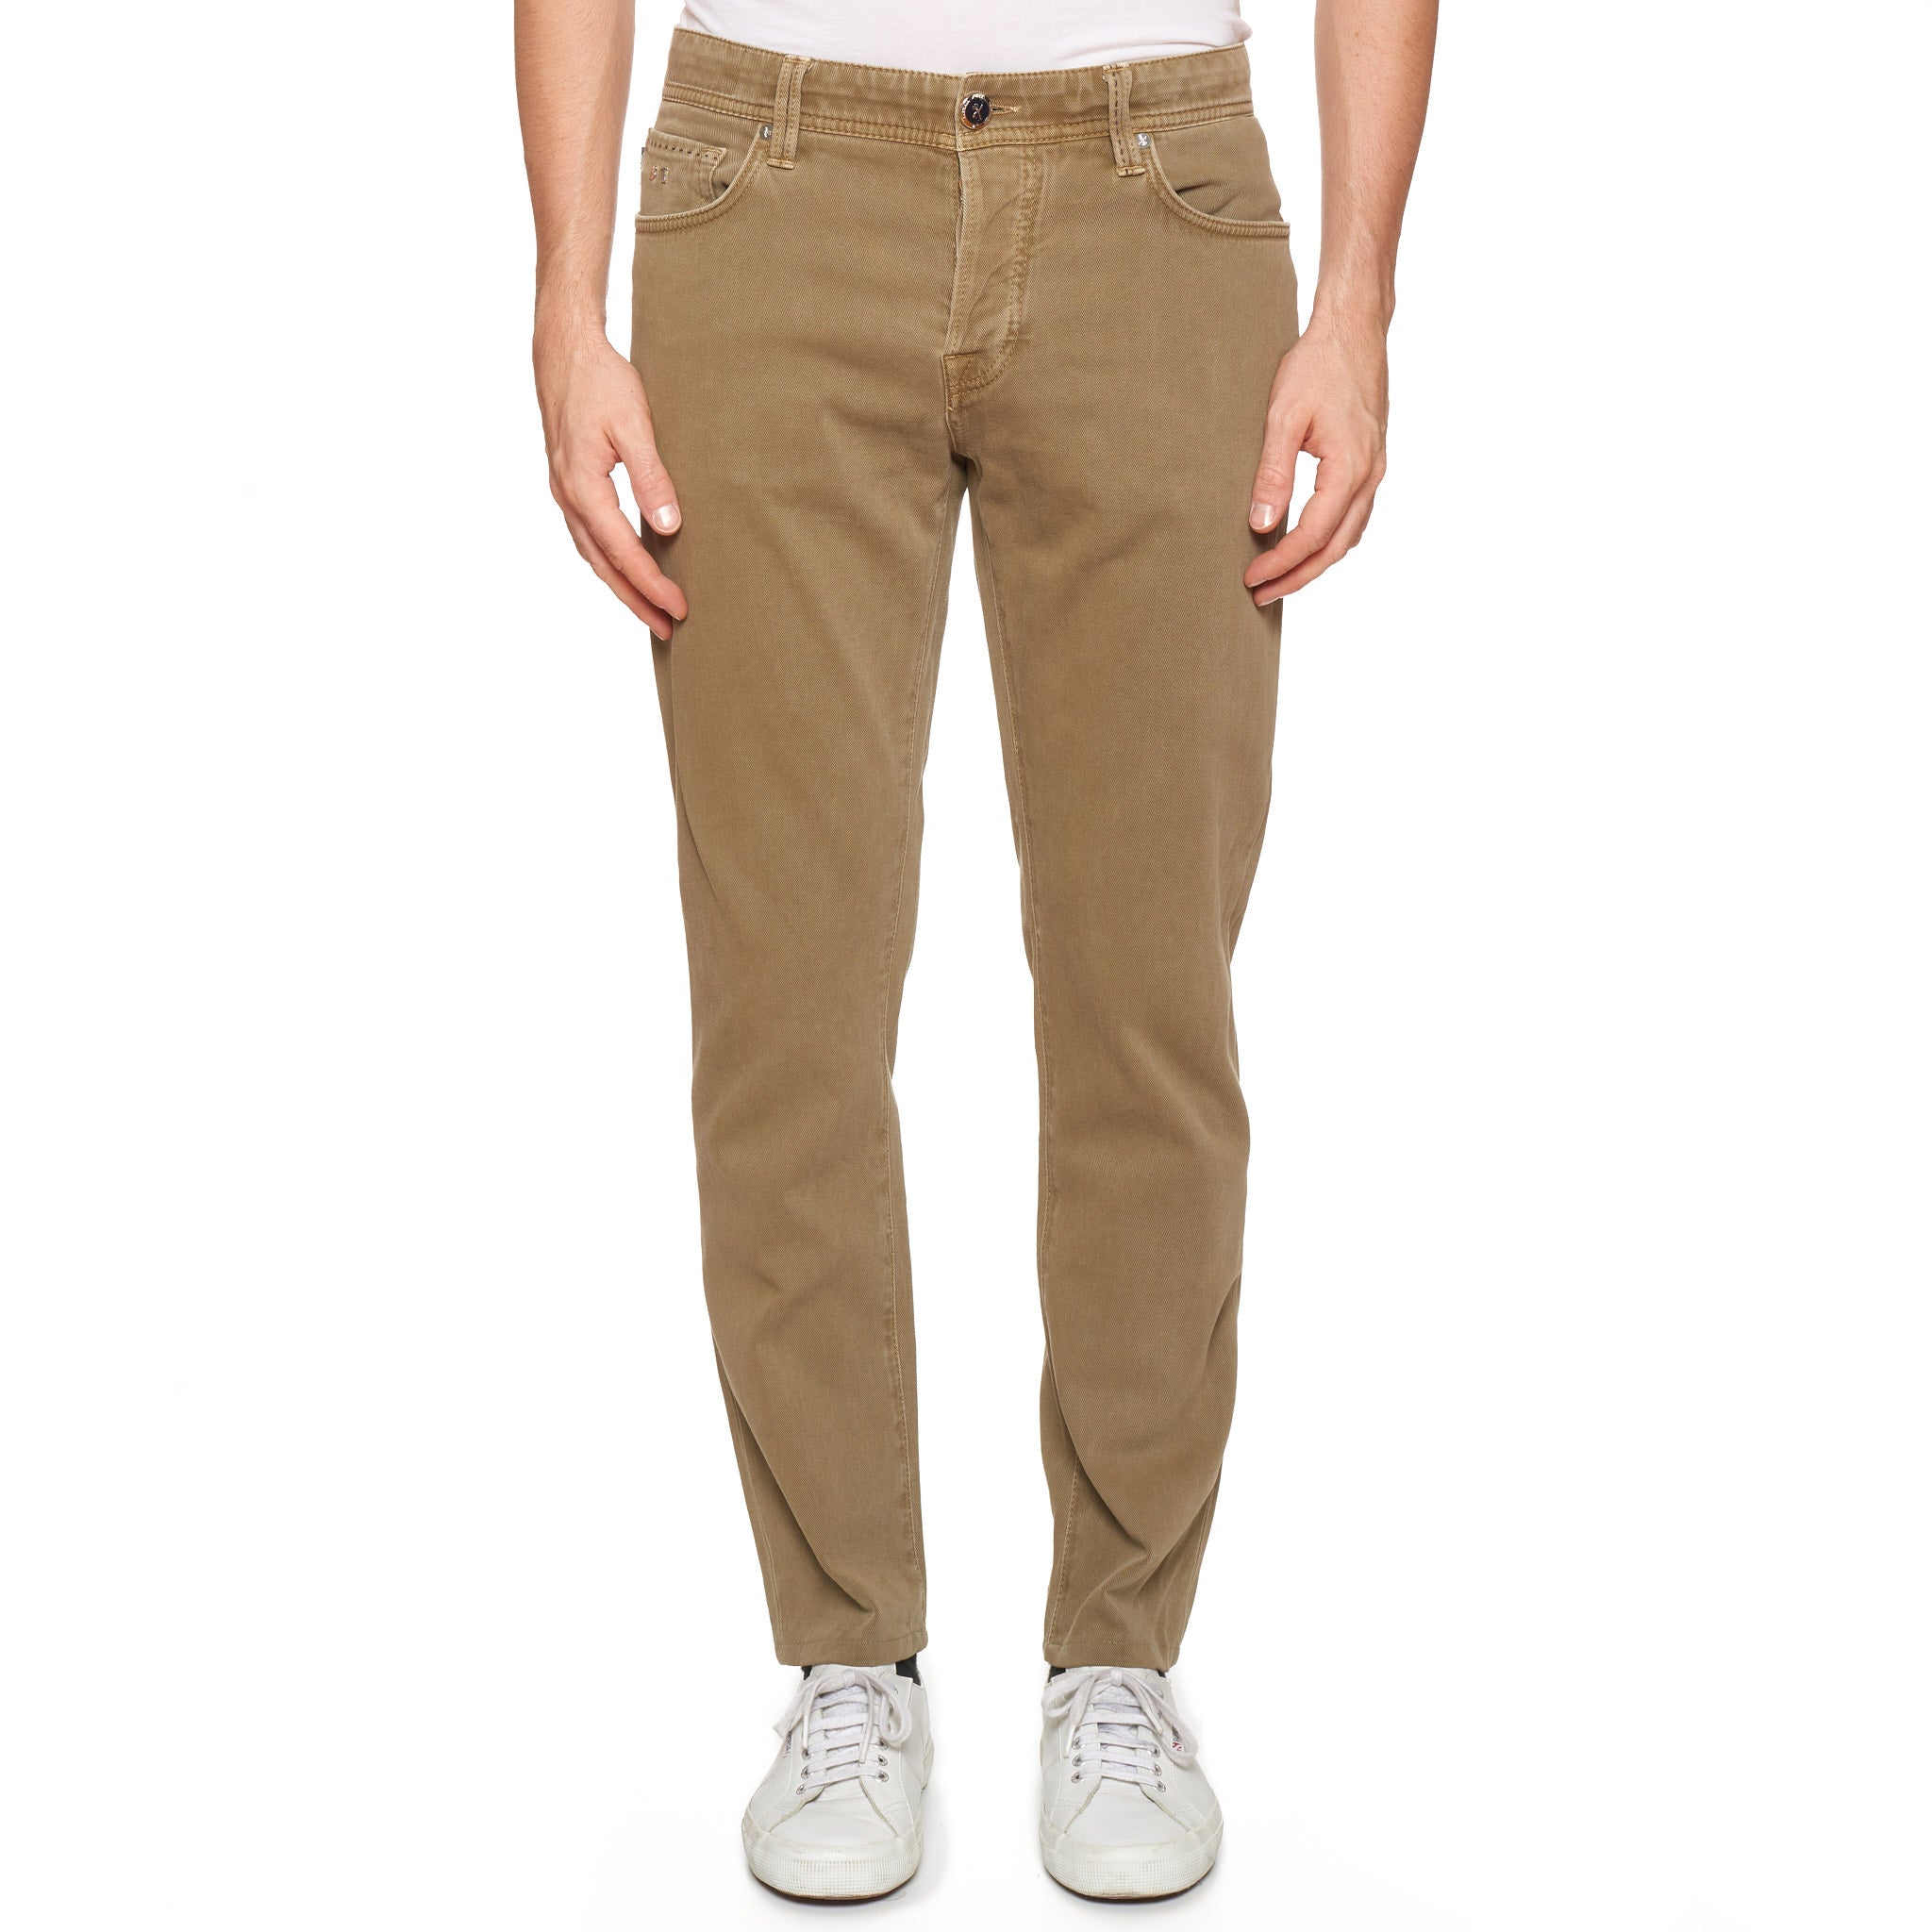 TRAMAROSSA Colour Leonardo Khaki Cotton Stretch Slim Fit Jeans Pants Size 33